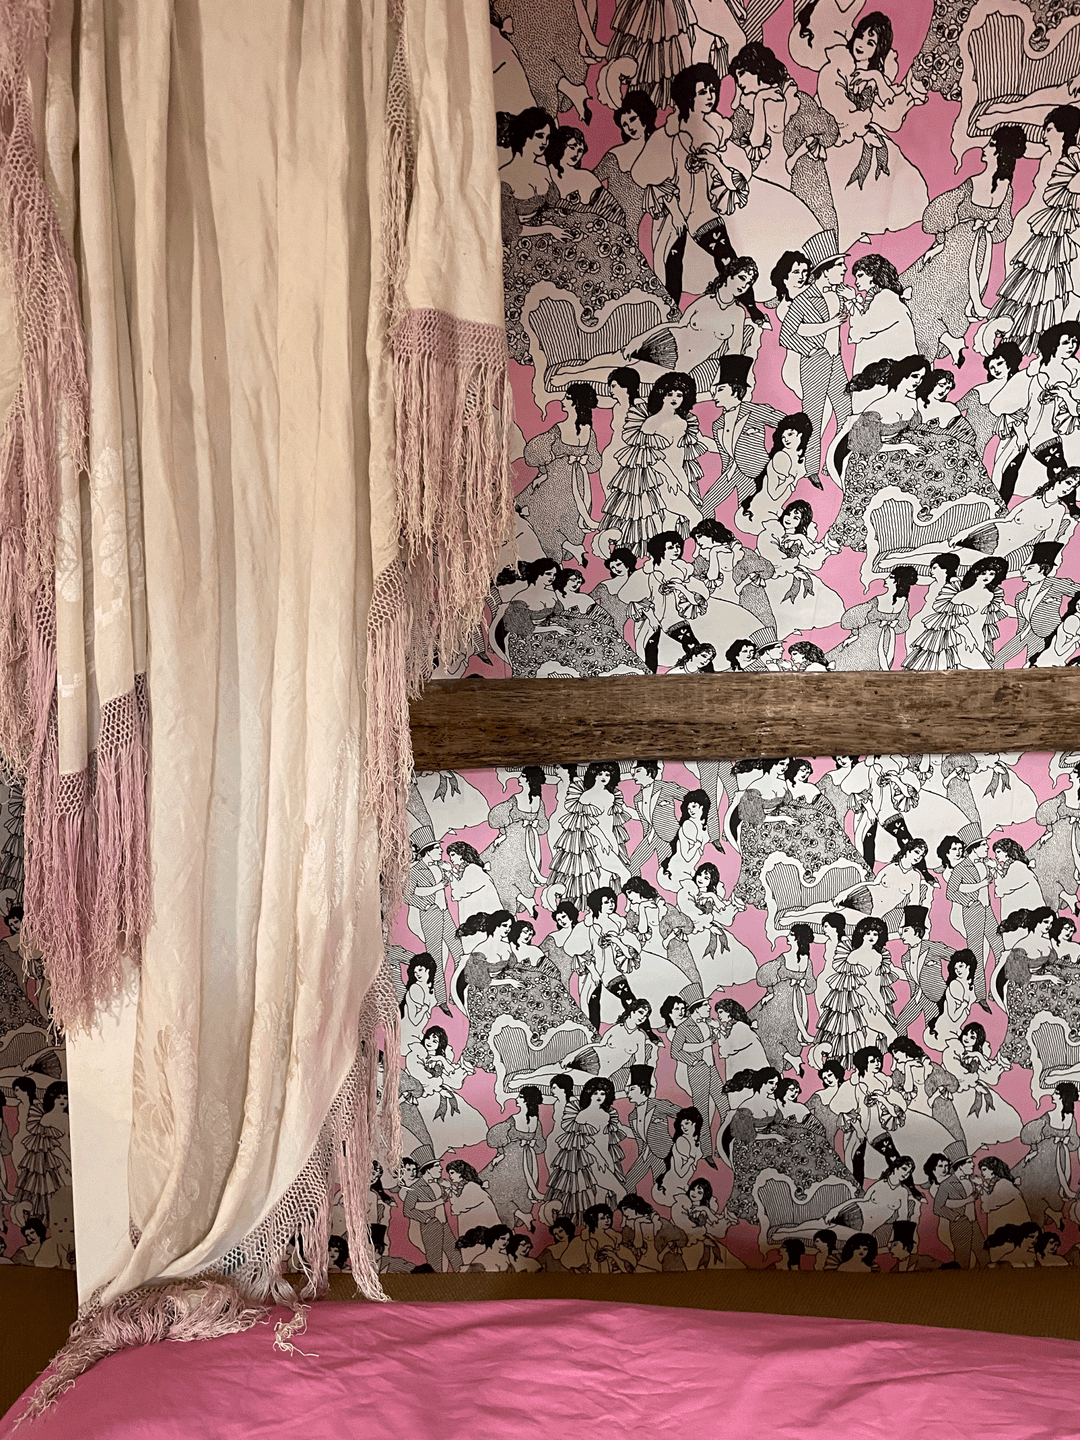 boudoir-ny-wallpaper-pink-retro-men-women-black-white-drawings